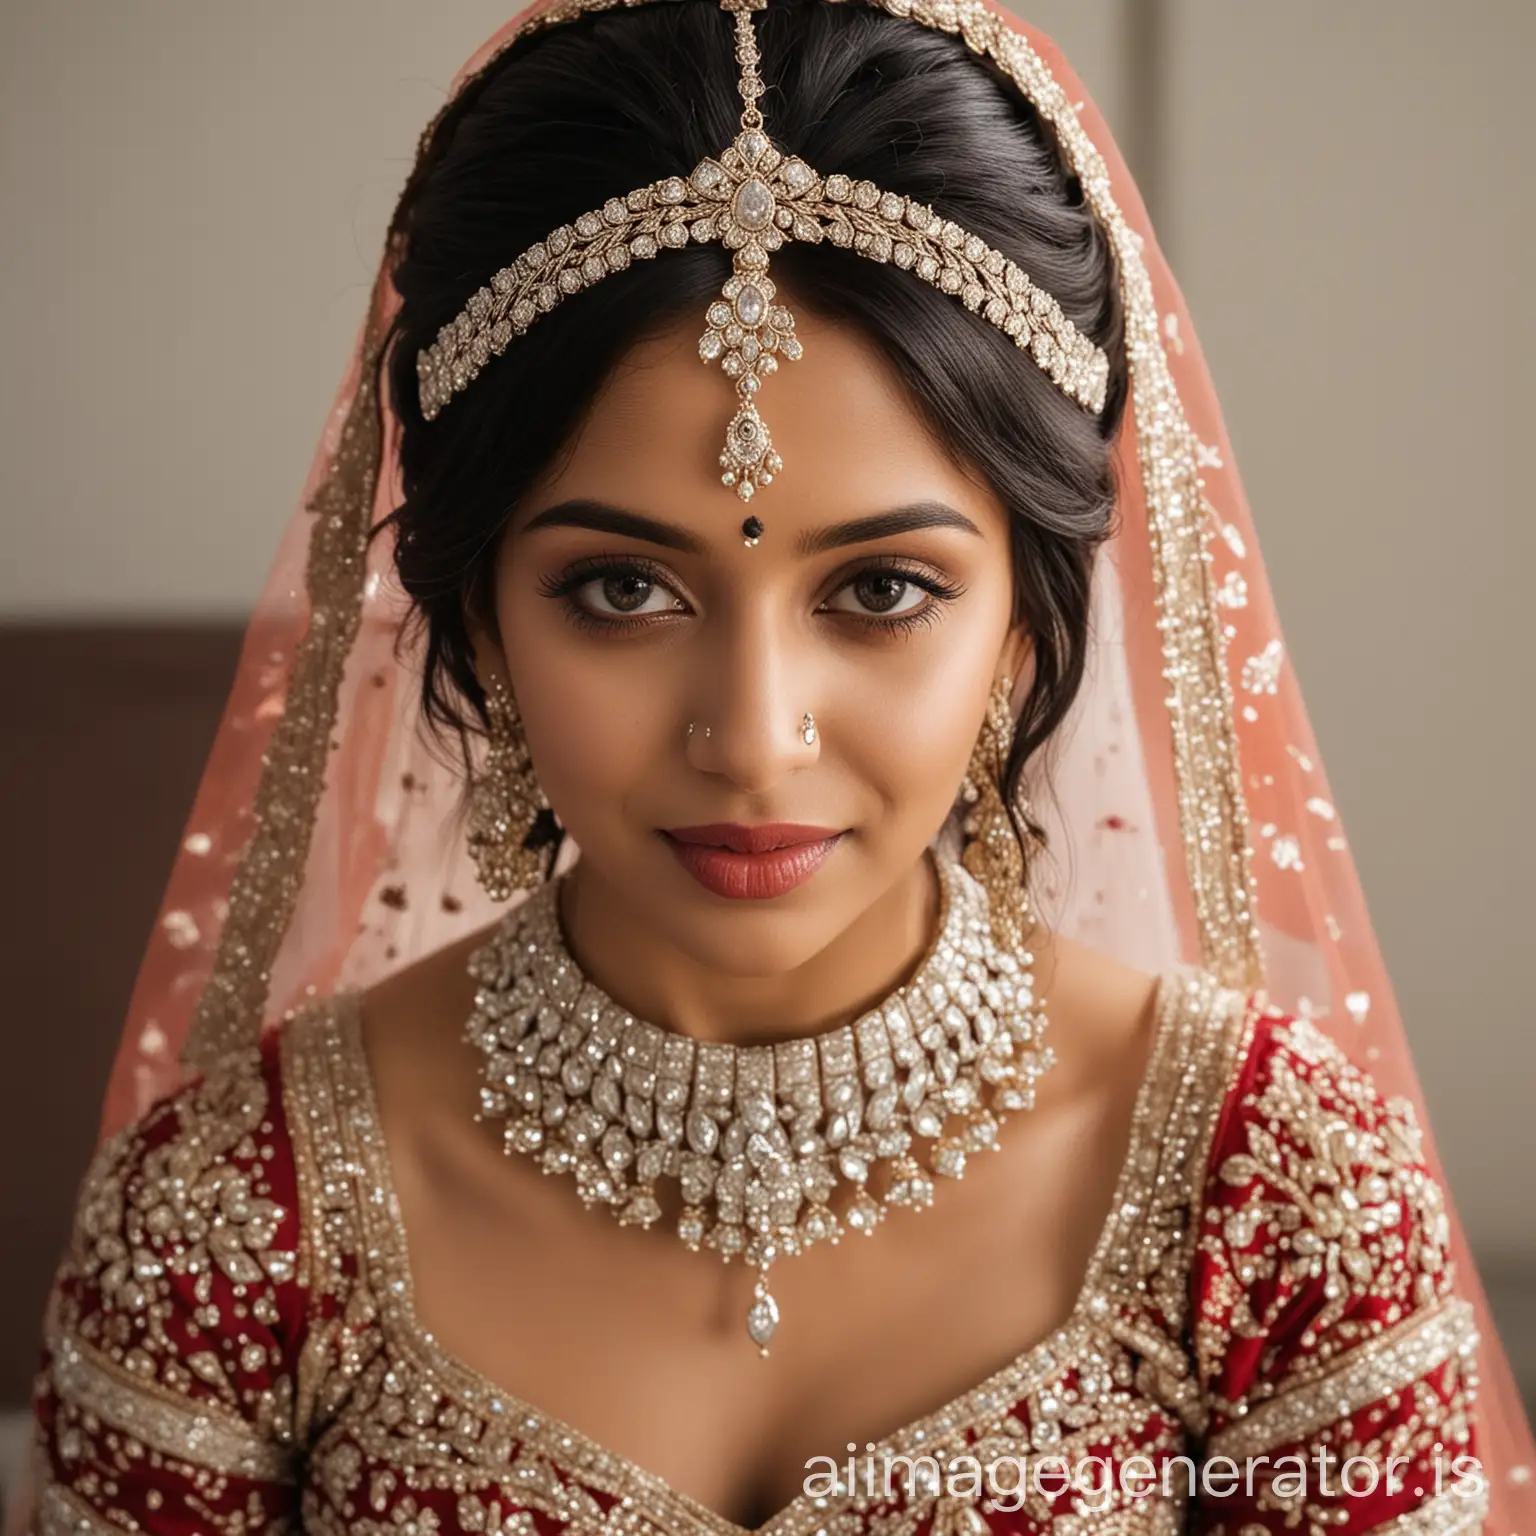 Traditional-Indian-Bride-Adorned-in-Bridal-Set